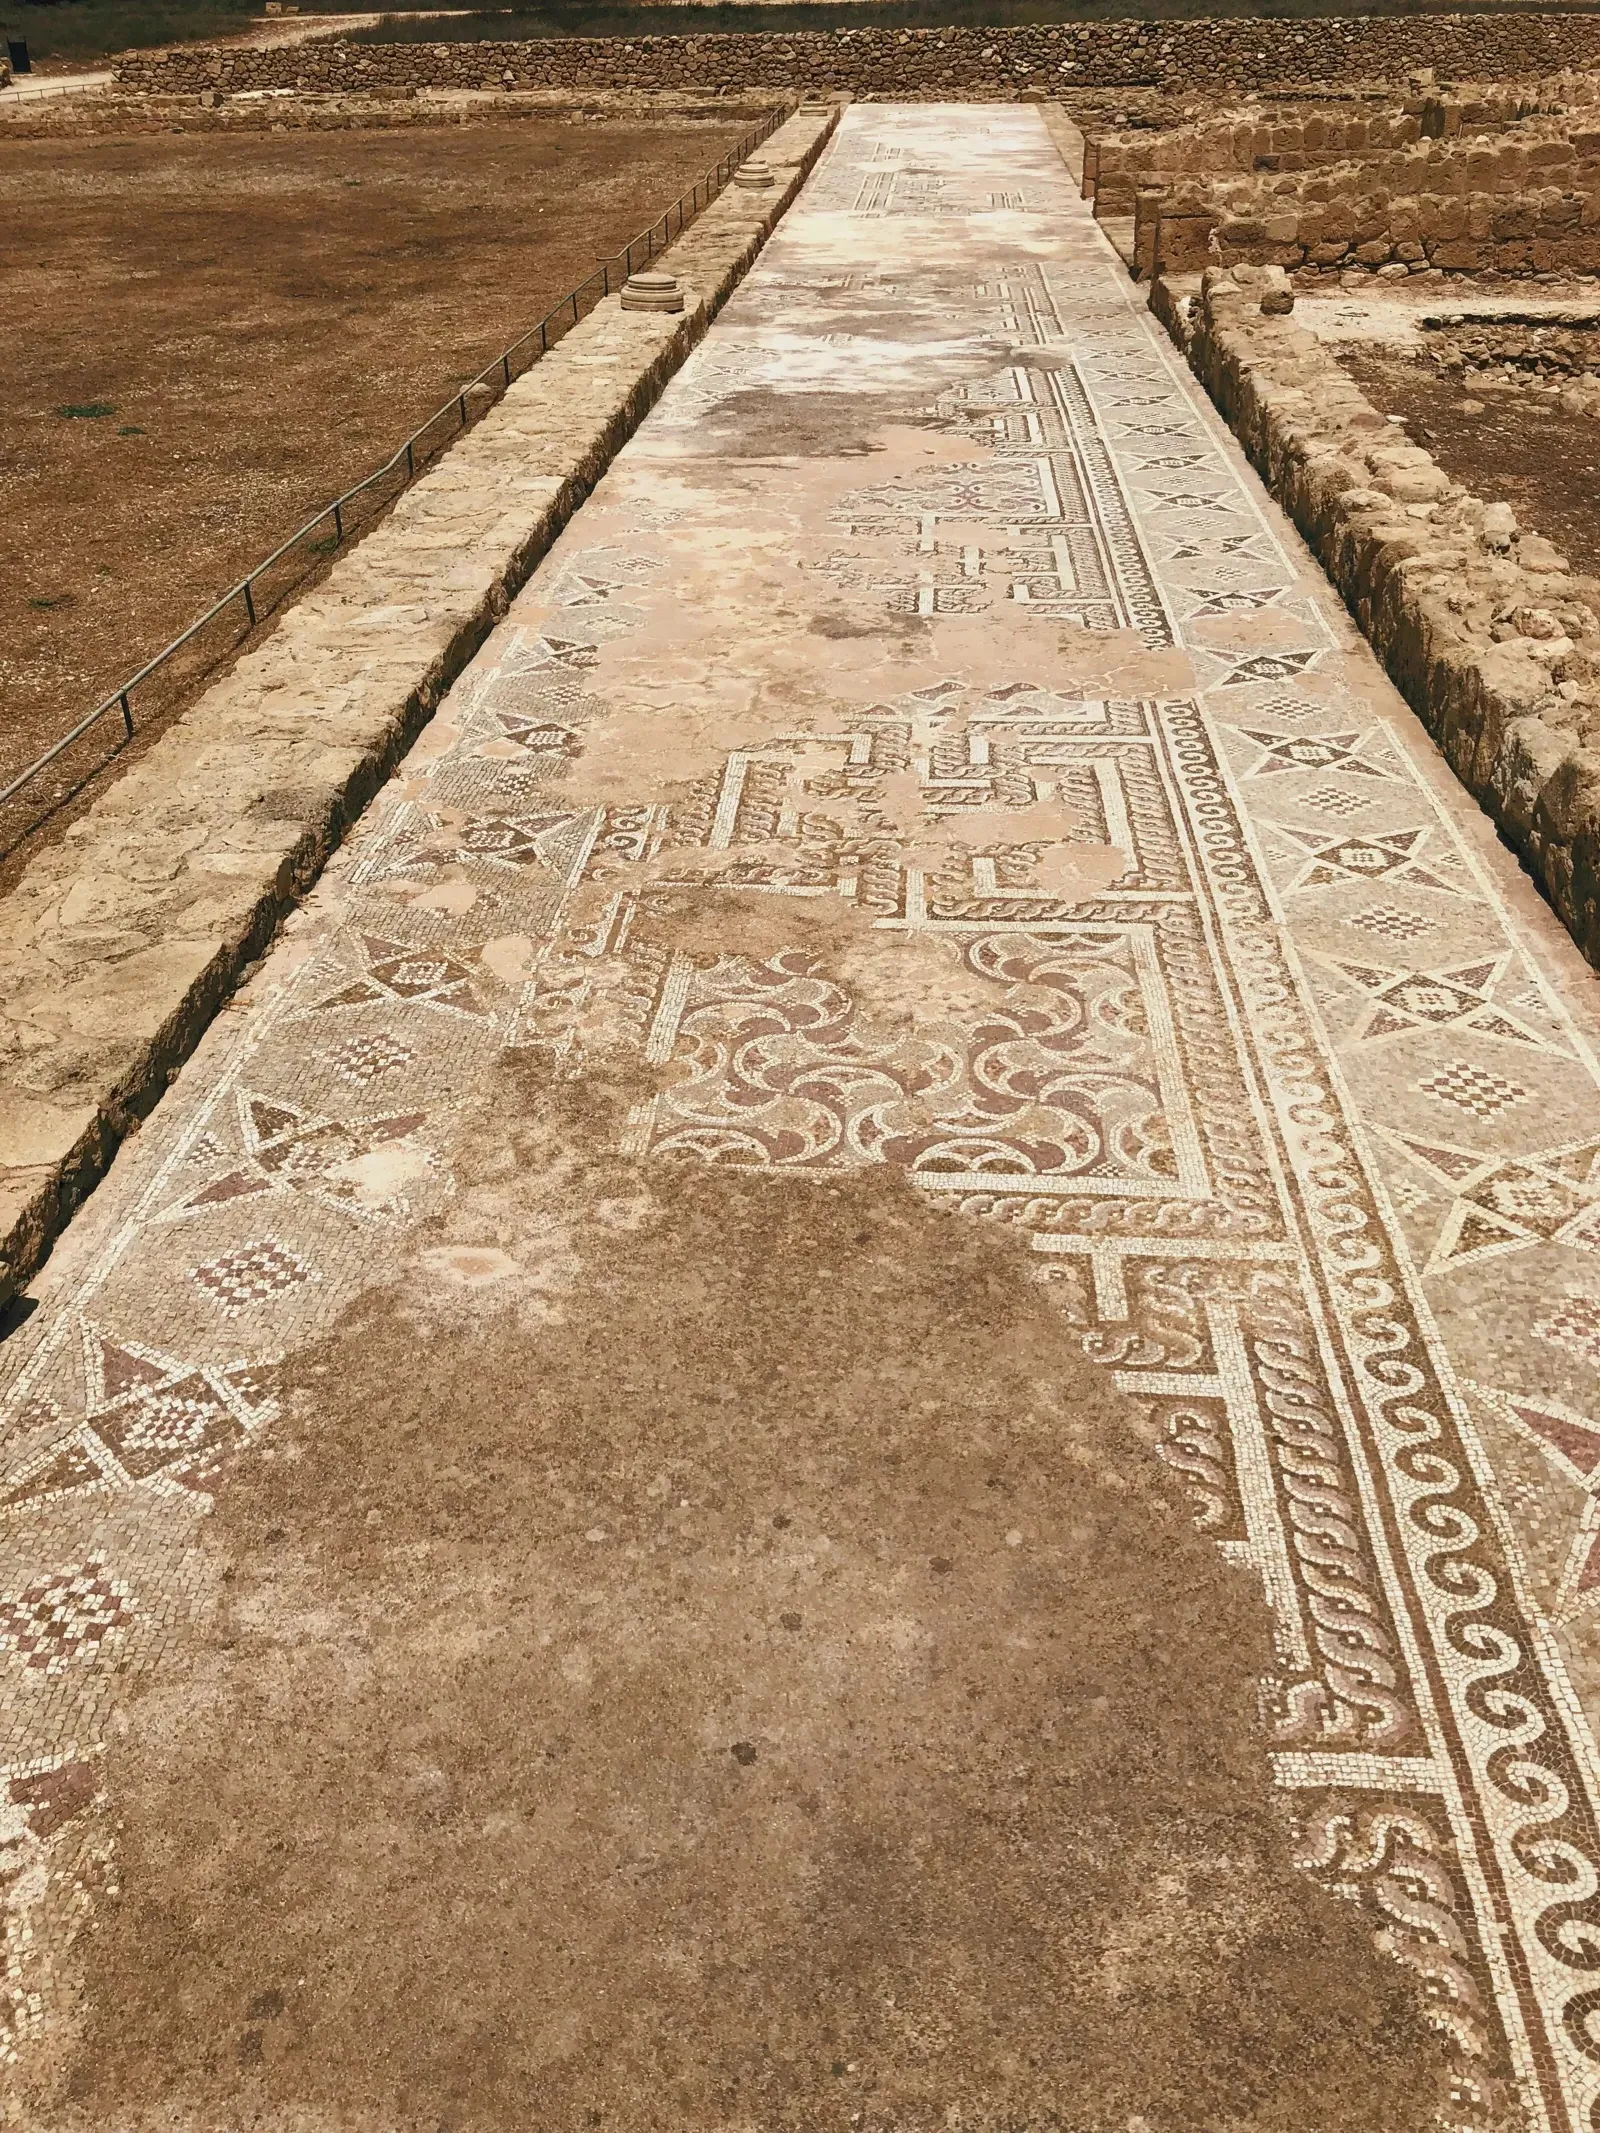 Intricate mosaic pattern in stone walkway at Nea Paphos